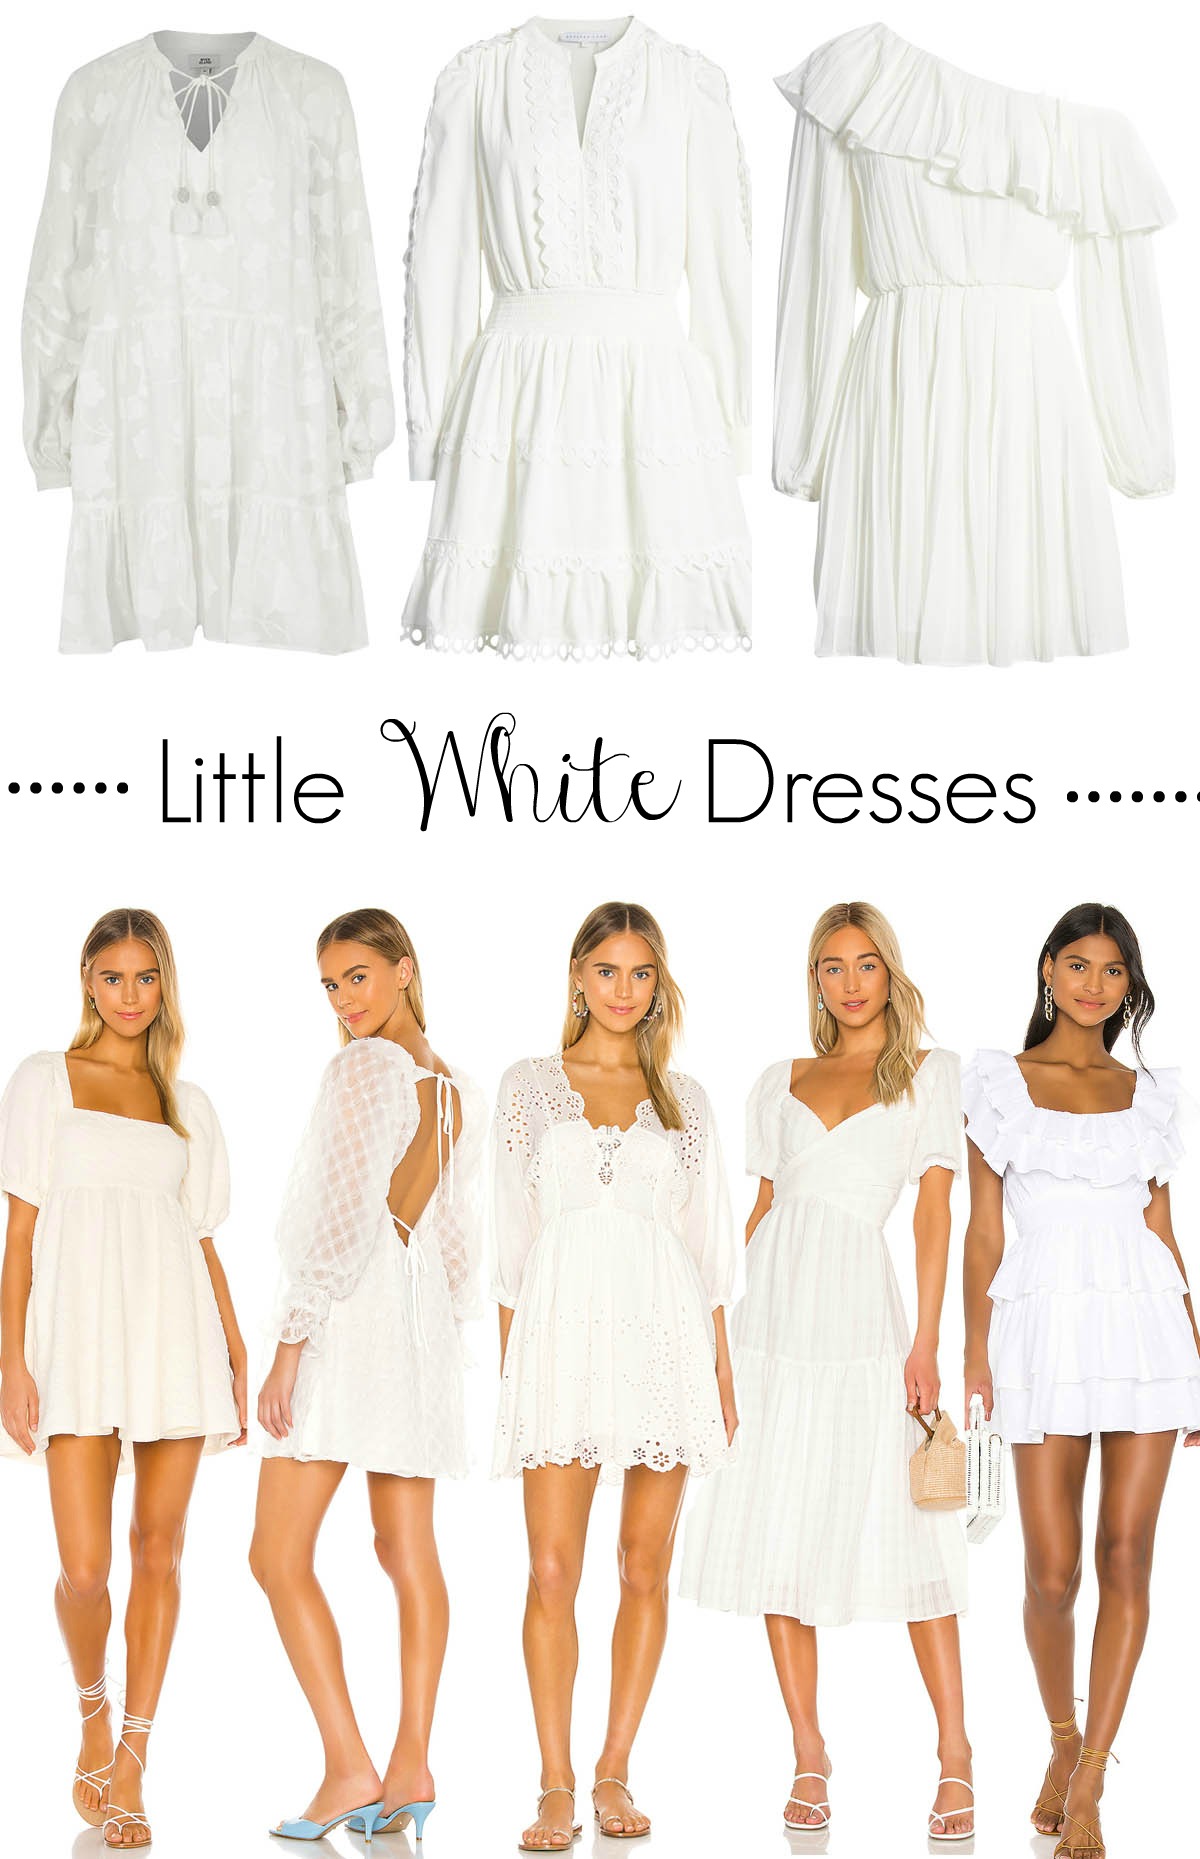 My Favorite Little White Dresses - Jimmy Choos & Tennis Shoes